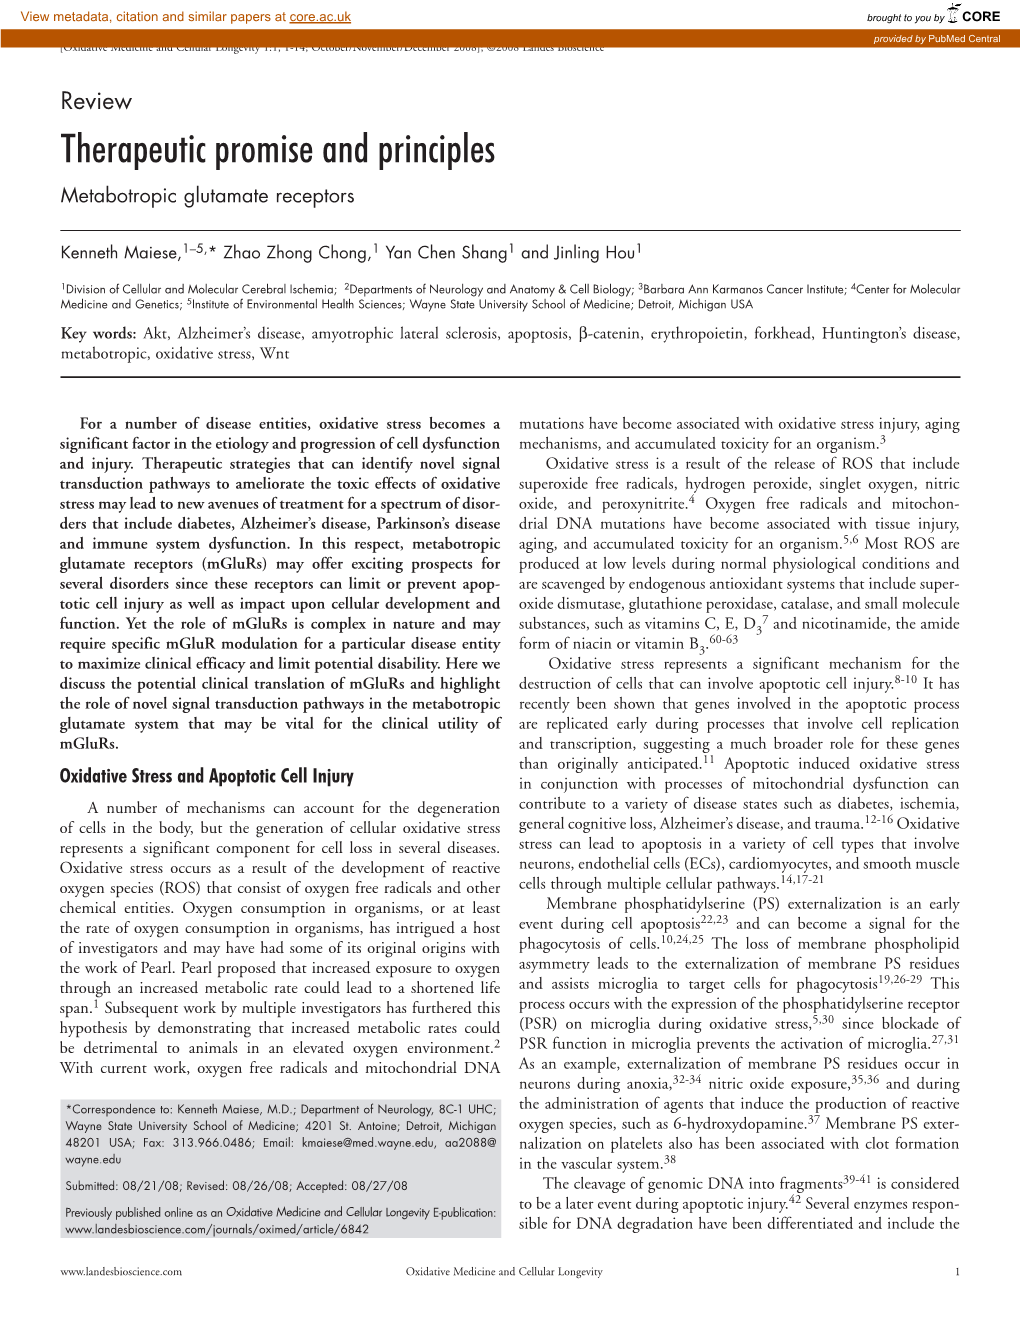 Therapeutic Promise and Principles Metabotropic Glutamate Receptors